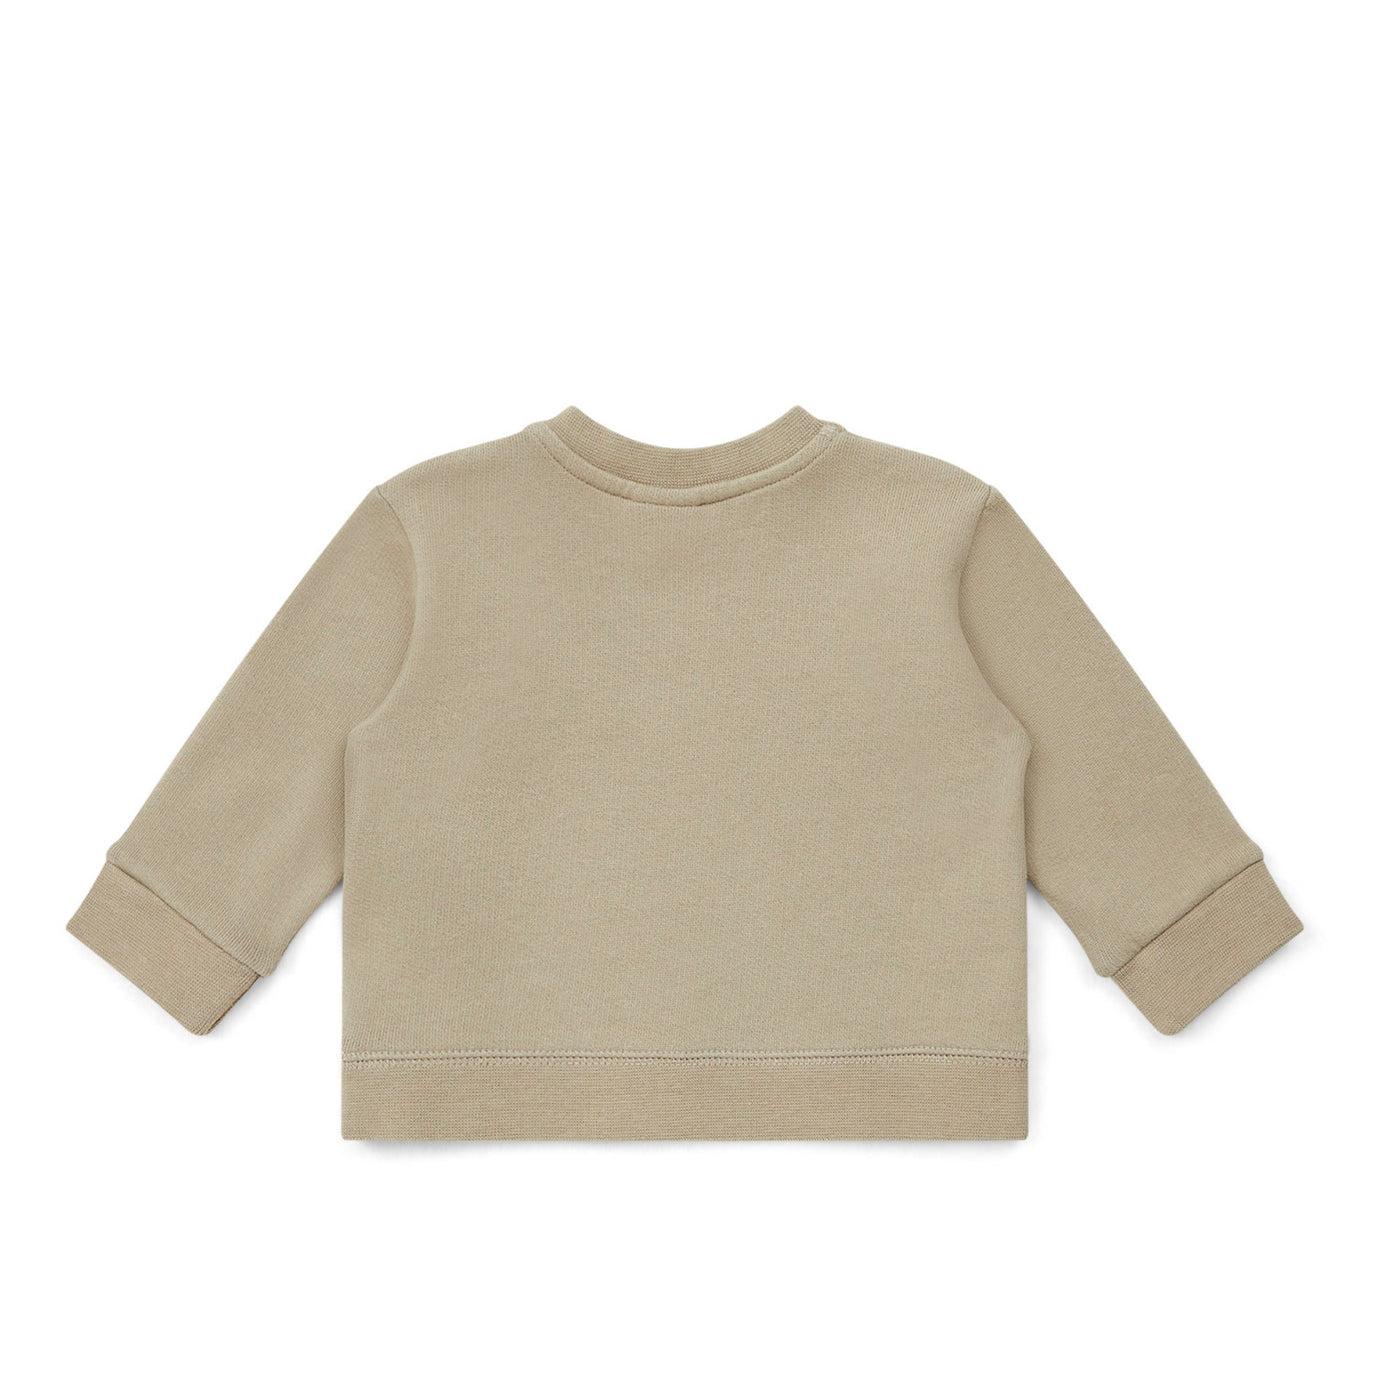 Slow Vibes Organic Cotton Baby Sweatshirt